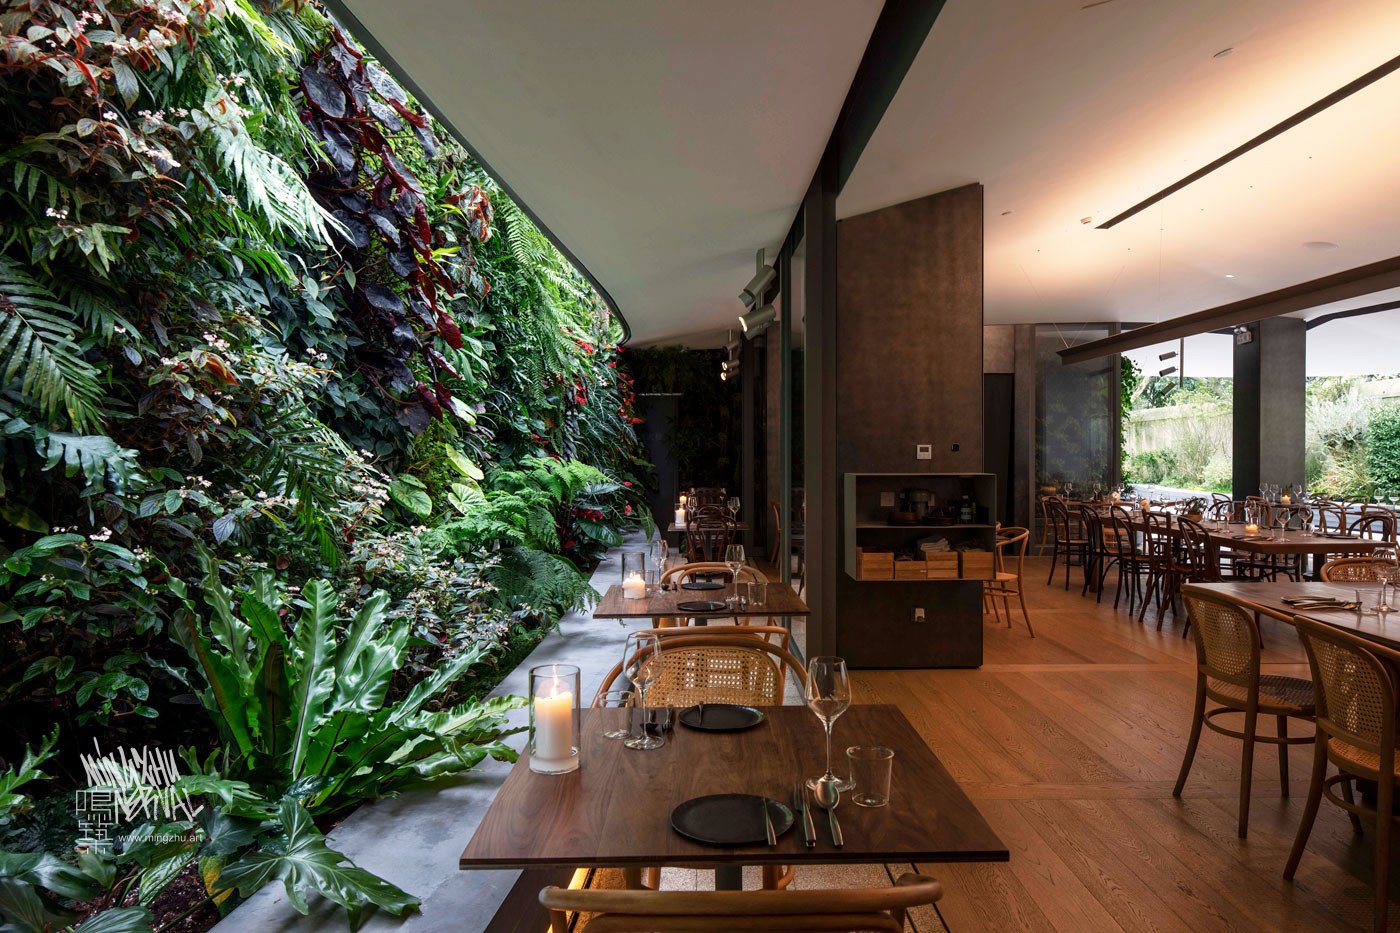 Mingzhu Nerval vertical living wall experts created the best garden design art for the Bloom restaurant in Shanghai, 2018